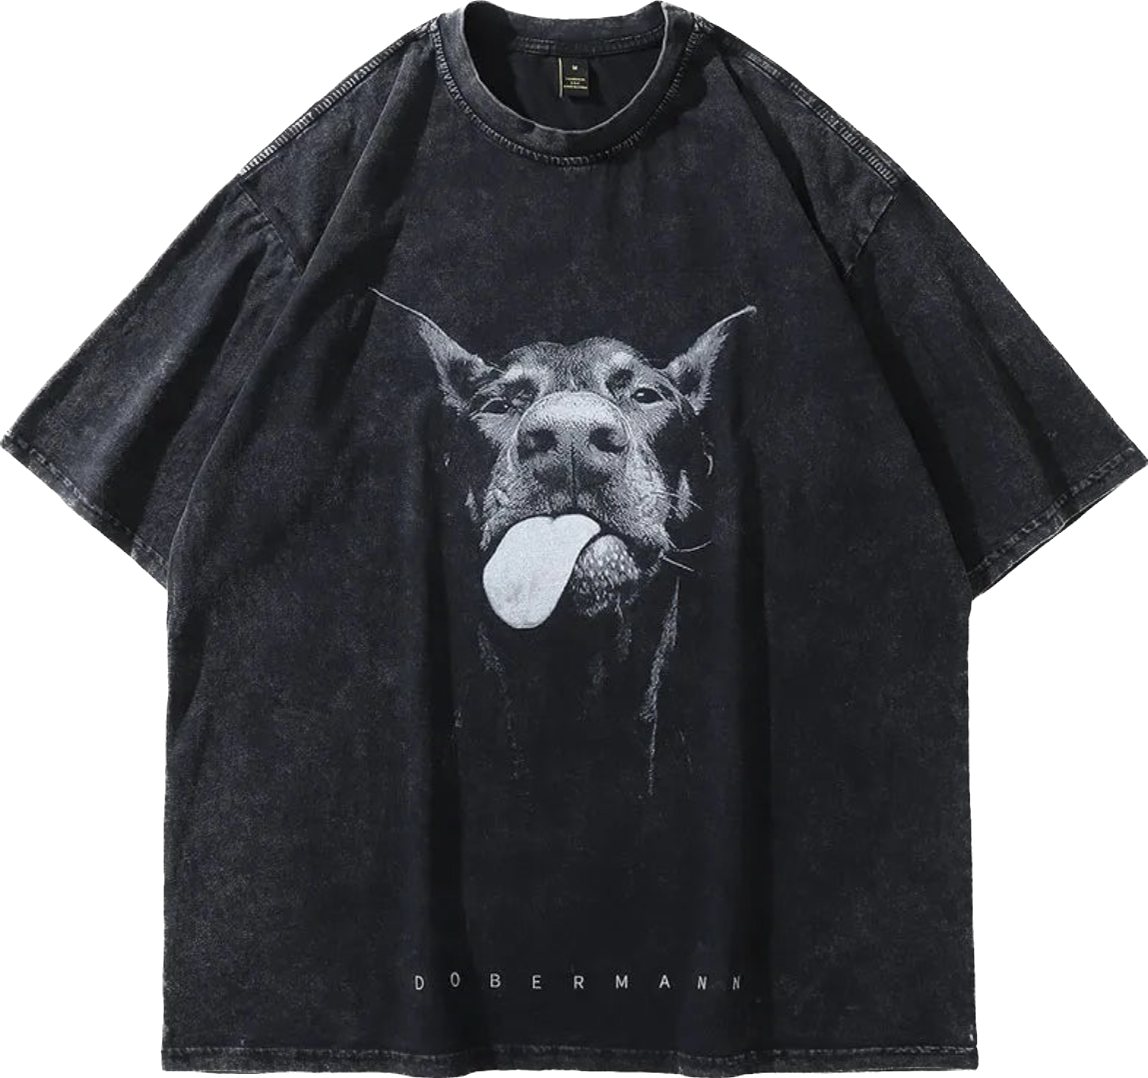 Doberman Dog T-Shirt